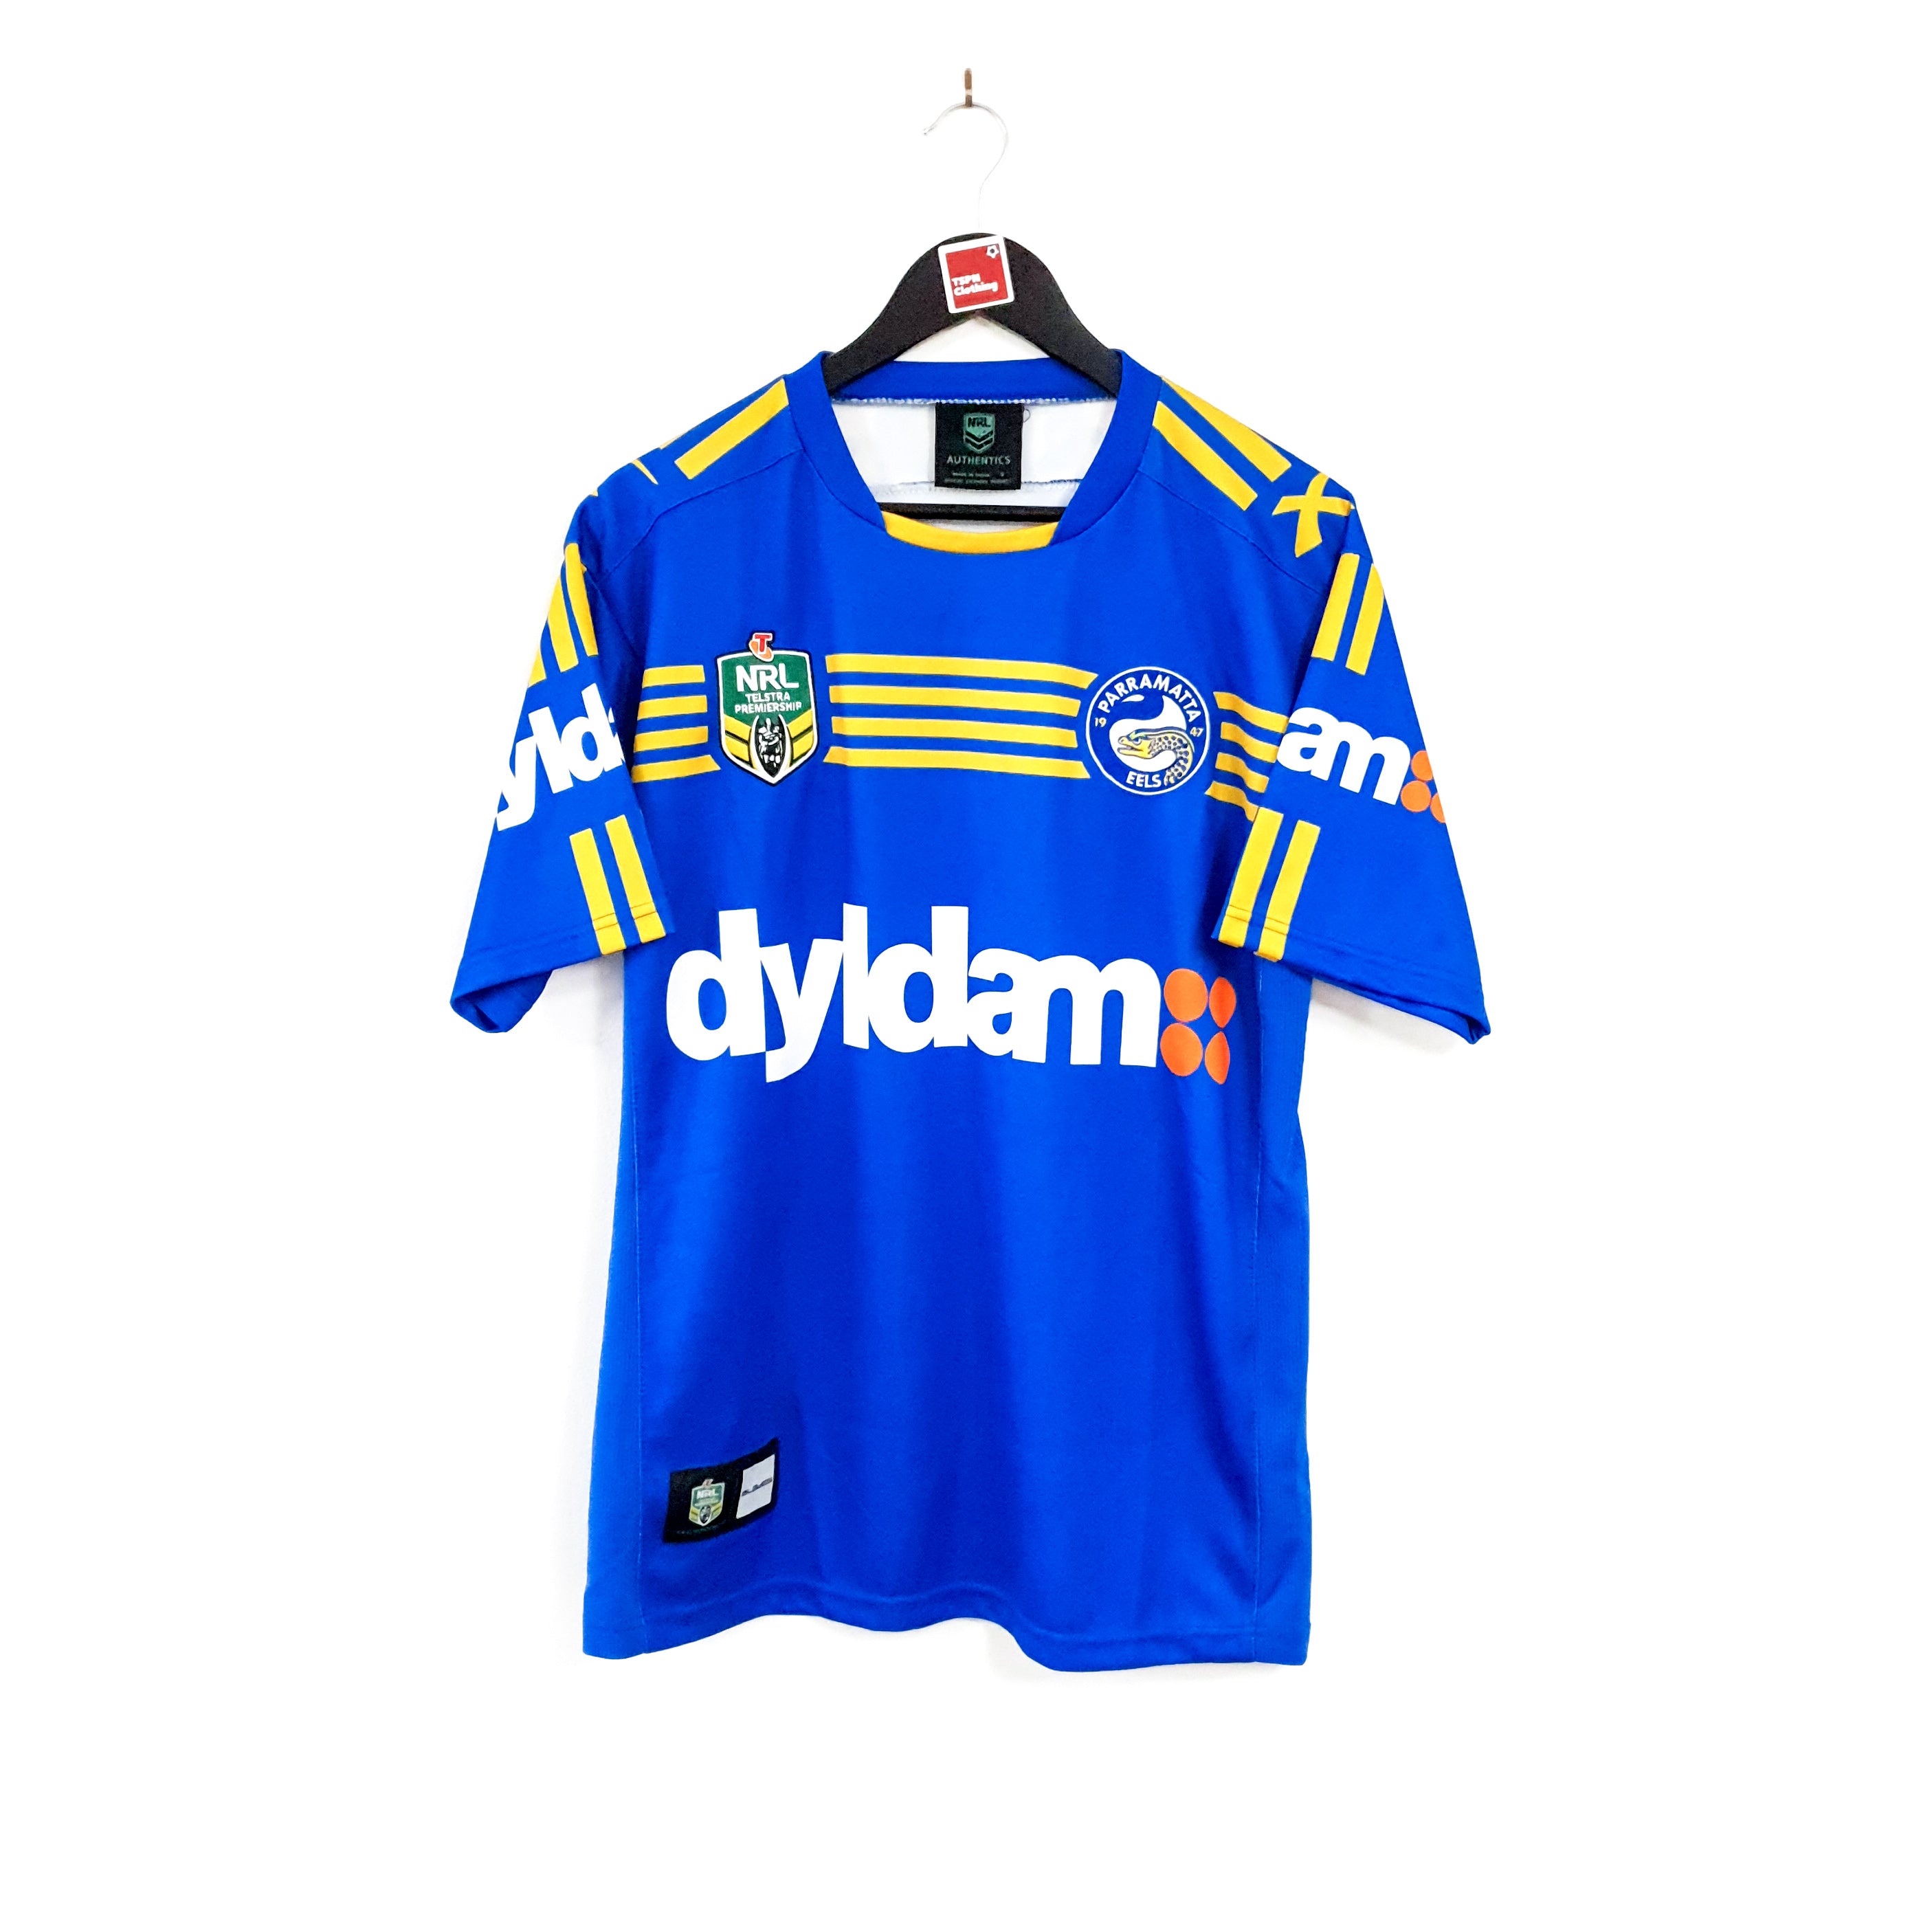 Parramatta Eels home rugby shirt 2014 - TSPN Calcio